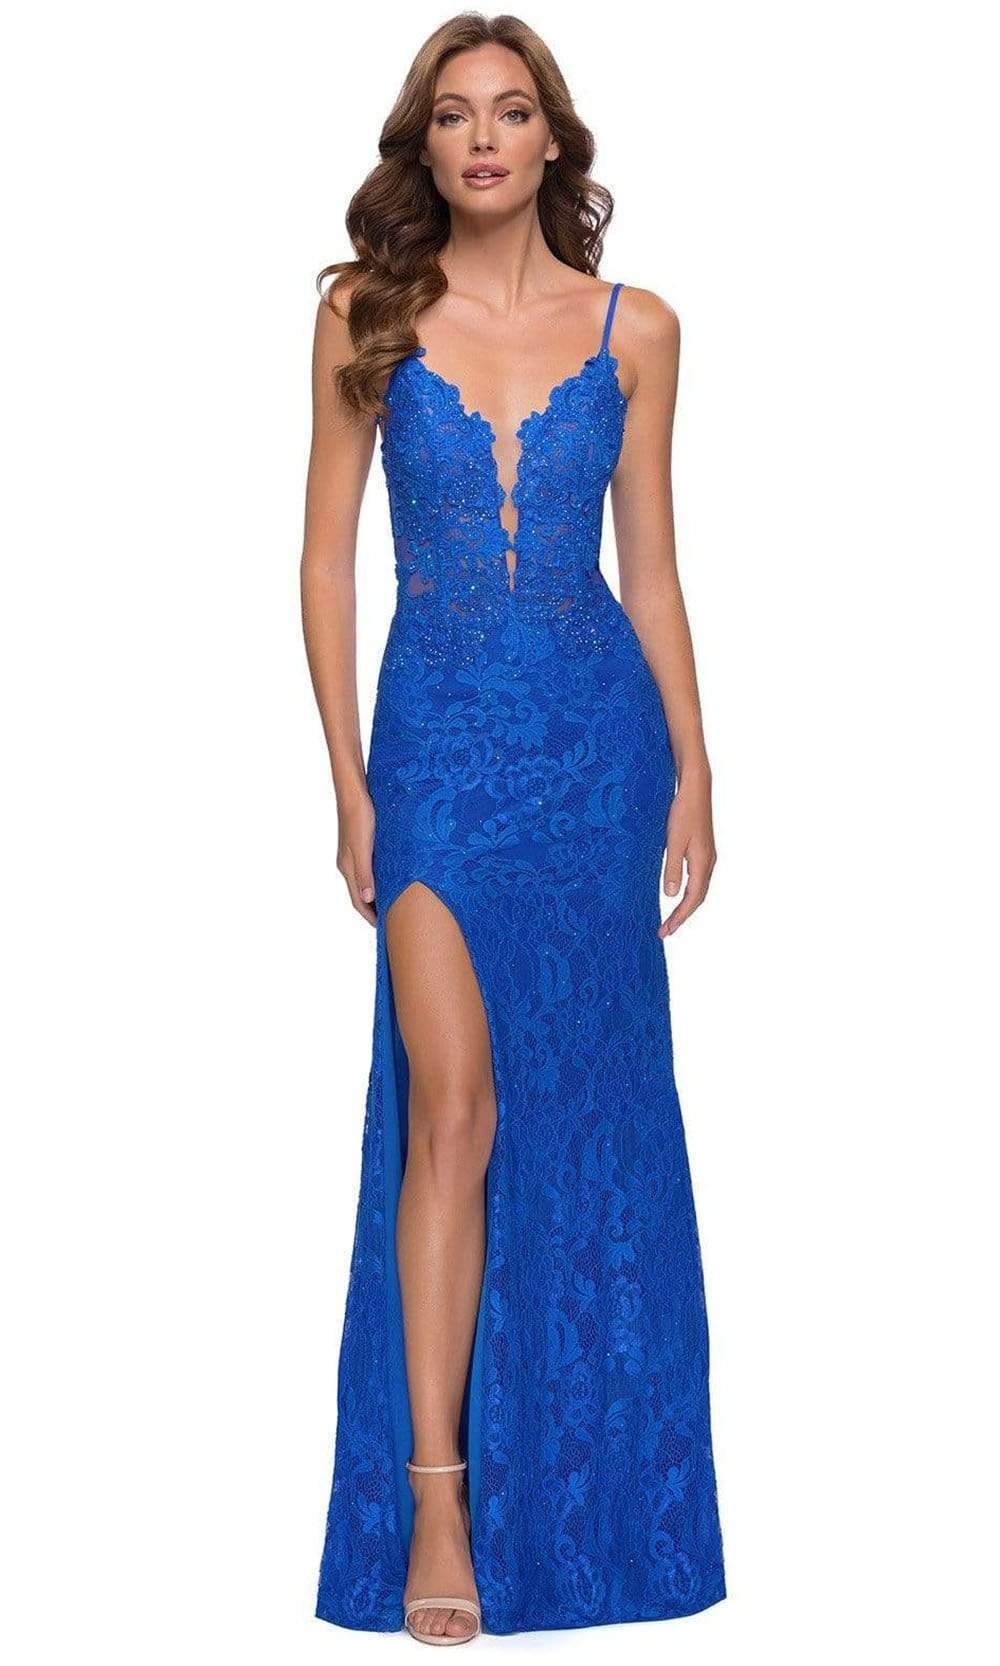 La Femme - 29842 Plunging Jeweled Lace High Slit Dress Prom Dresses 00 / Royal Blue